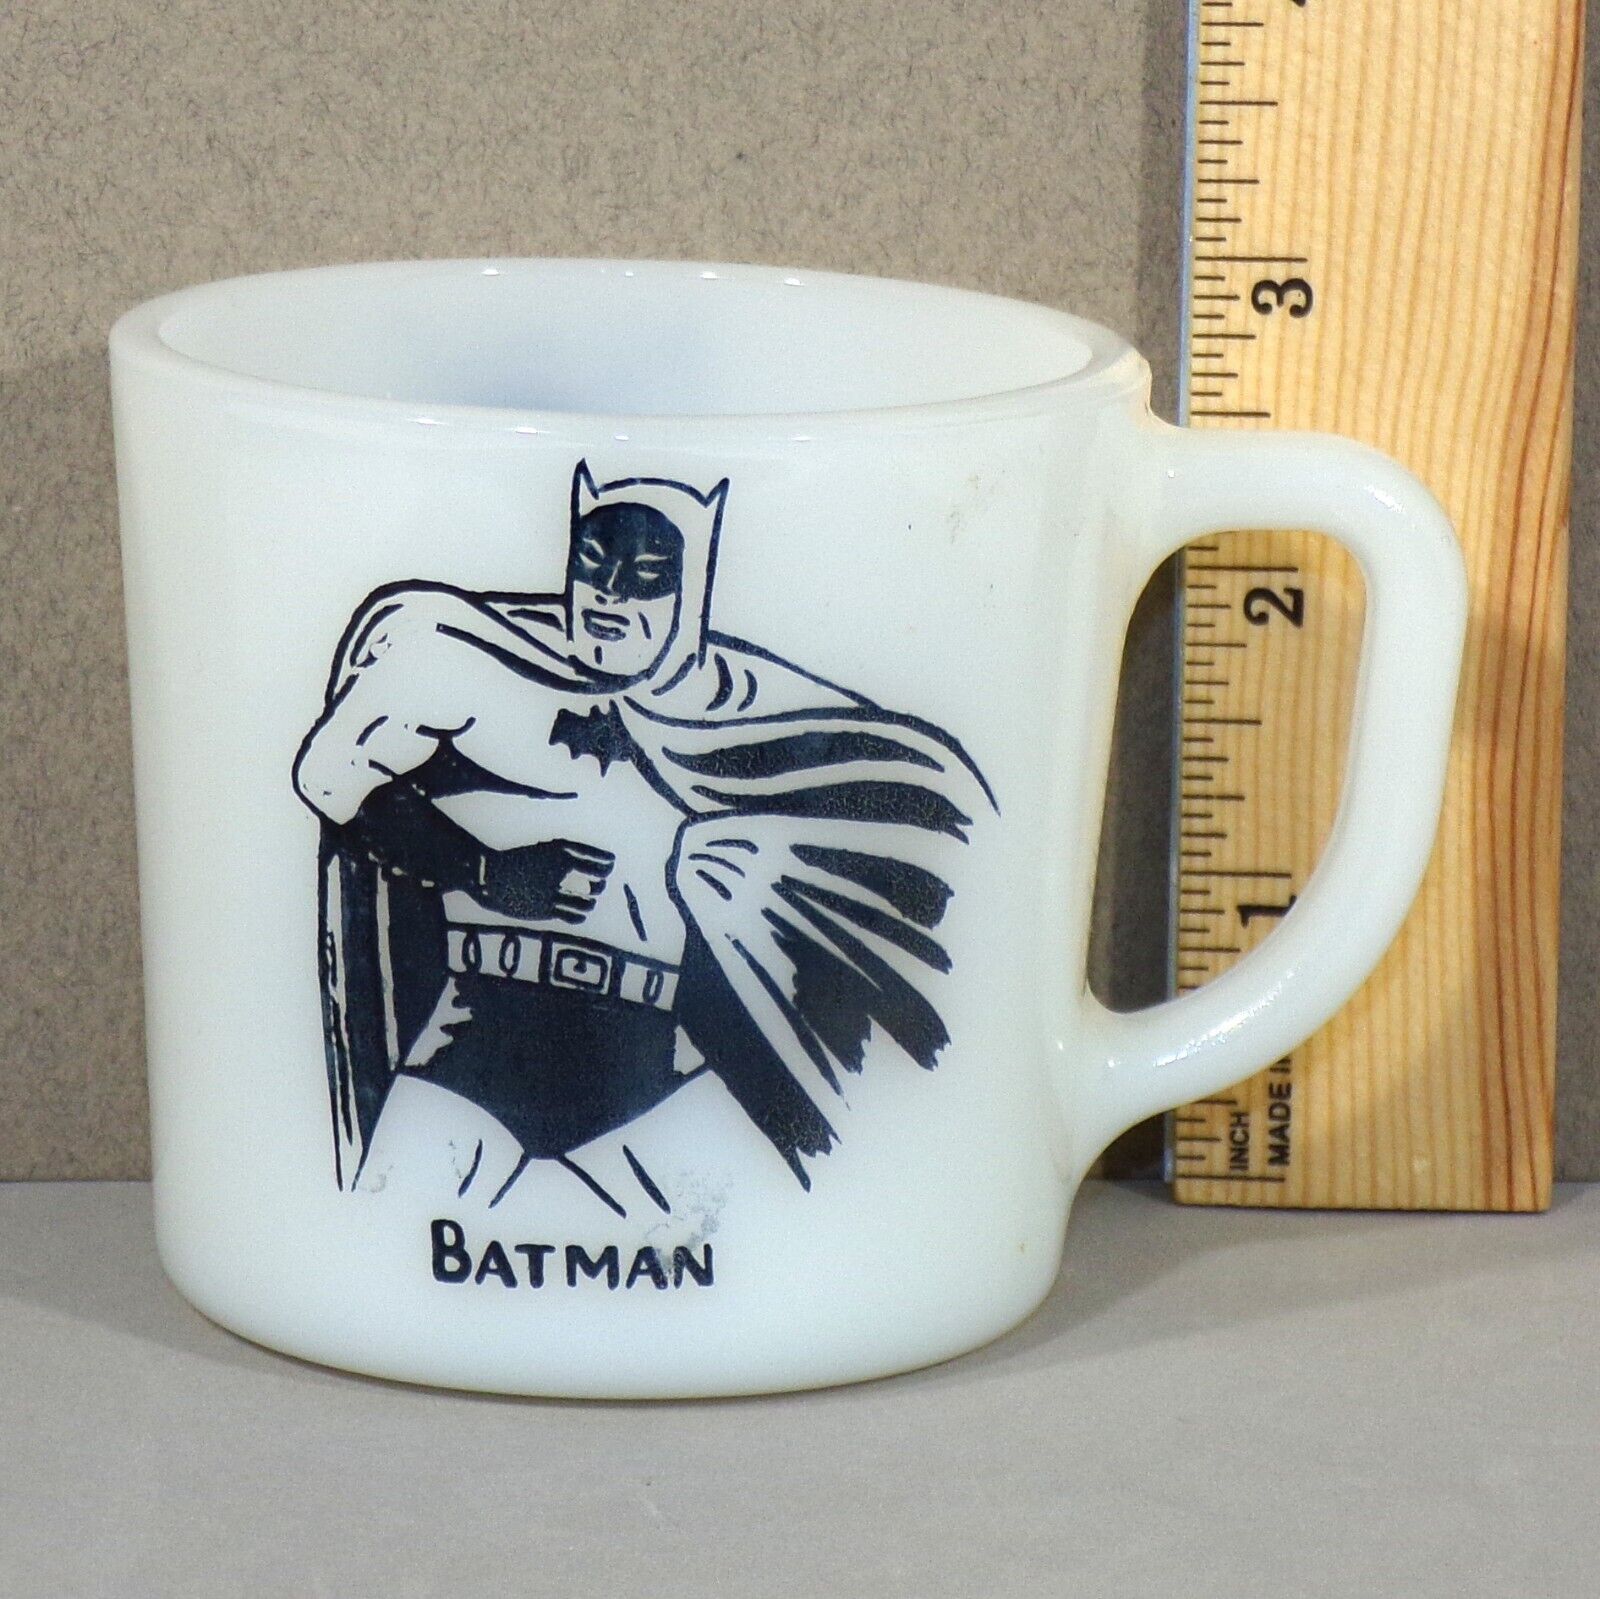 Vintage BATMAN Mug Cup  by Westfield Heat Proof  3 inch milk glass  1966